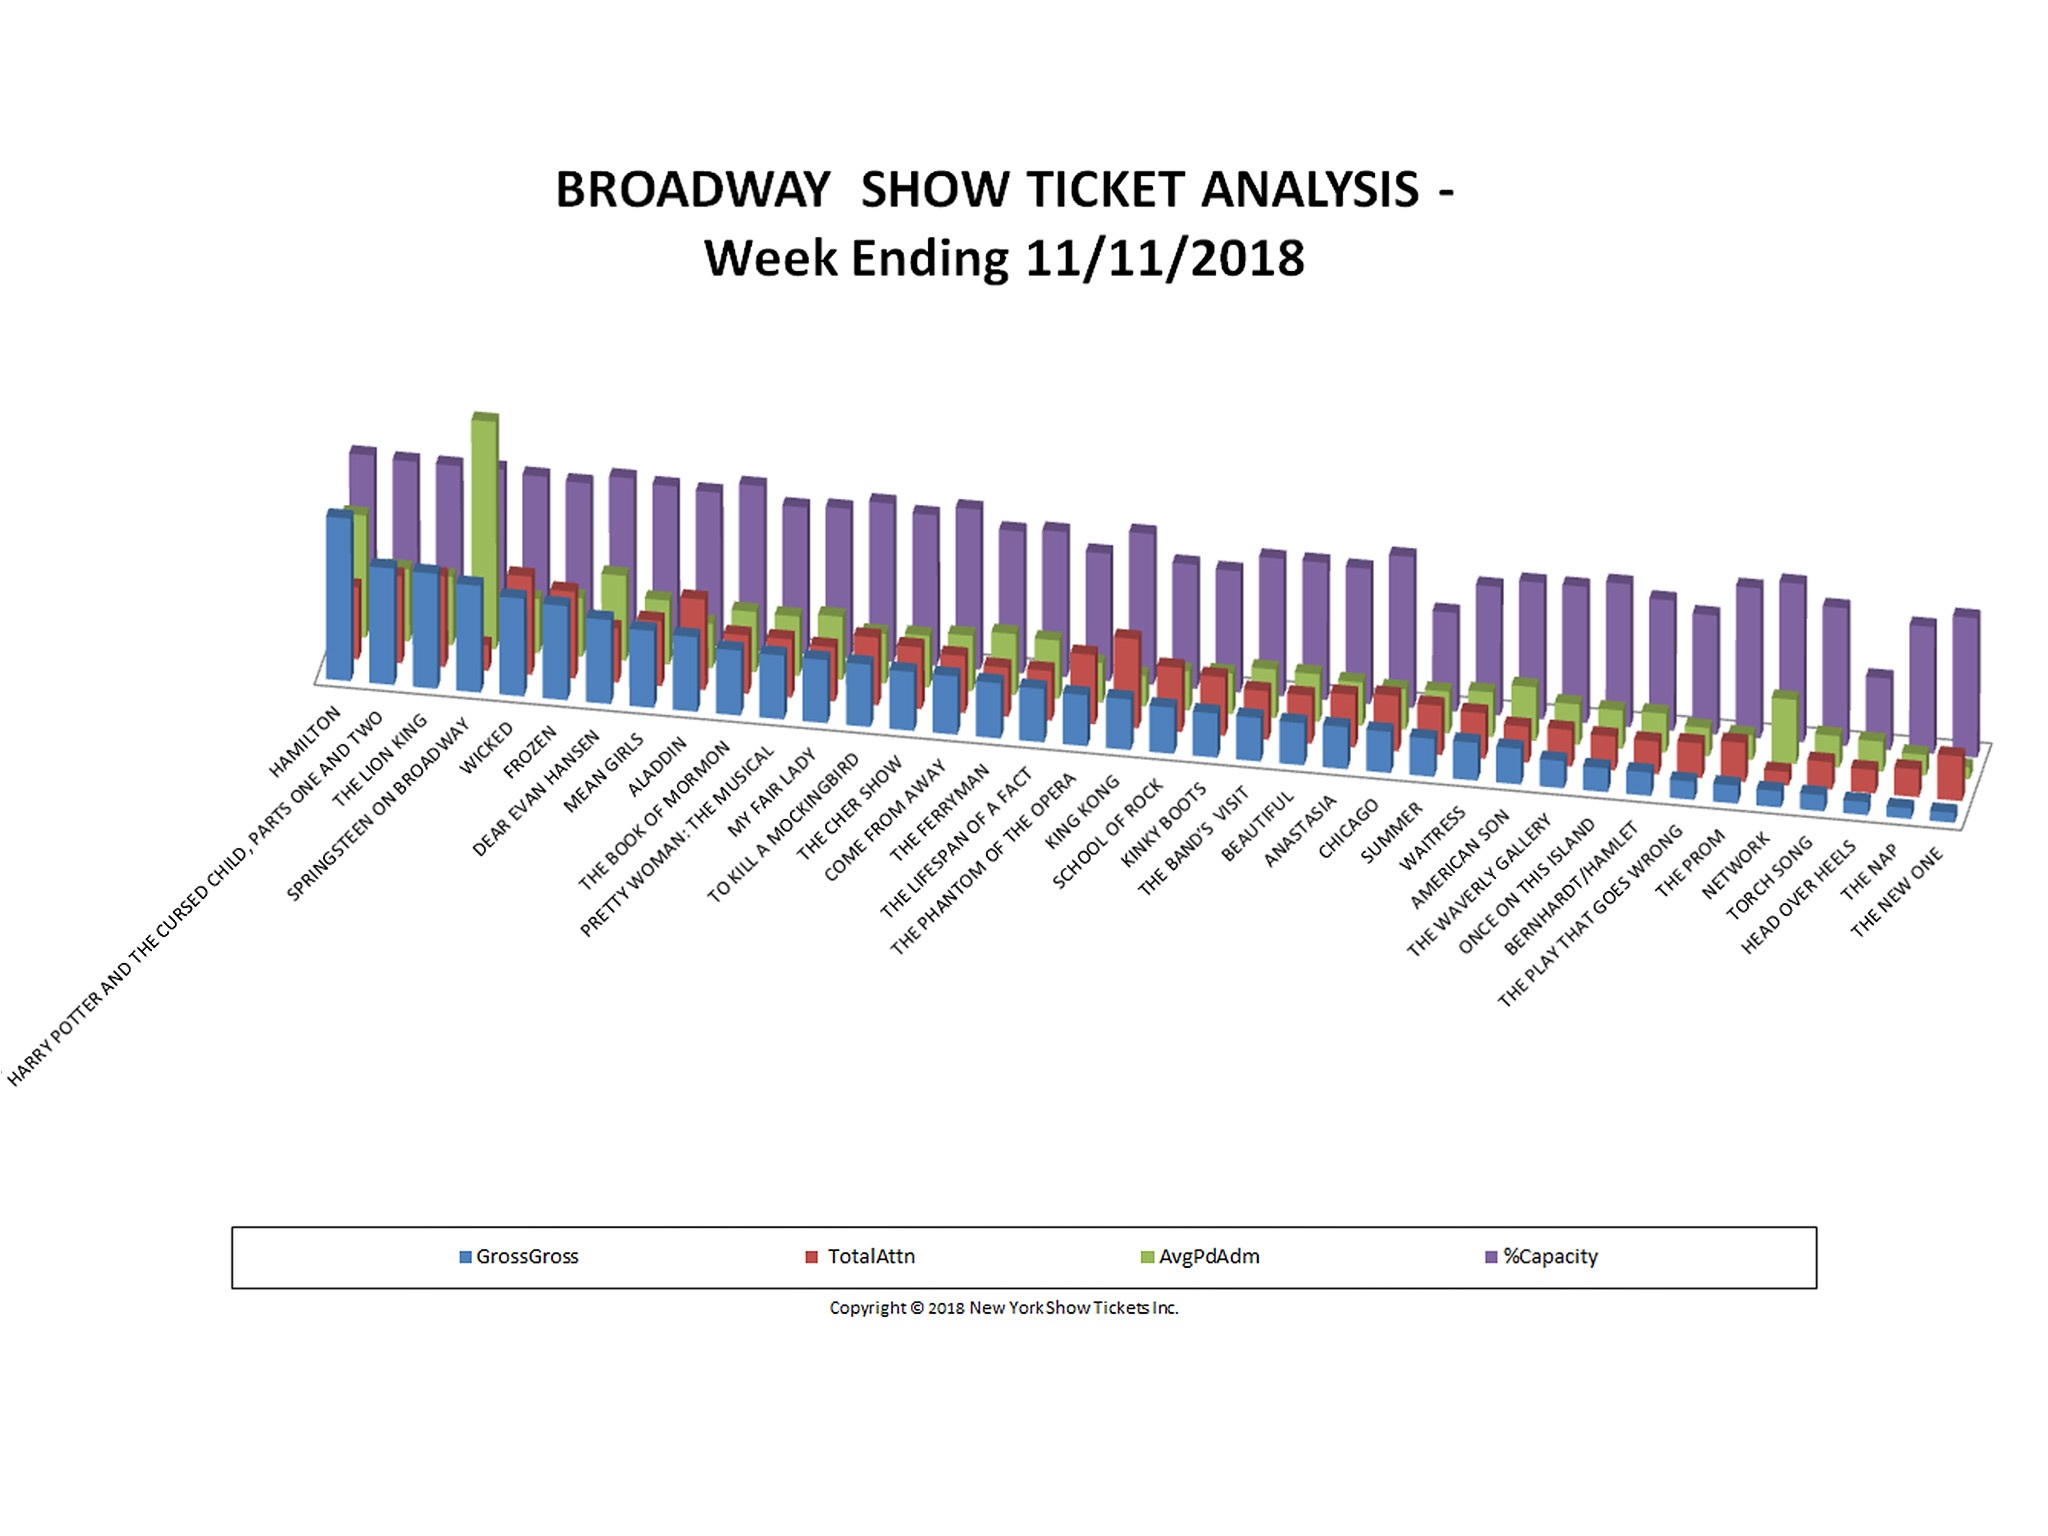 Broadway Show Ticket Sales Analysis Chart 11/11/18